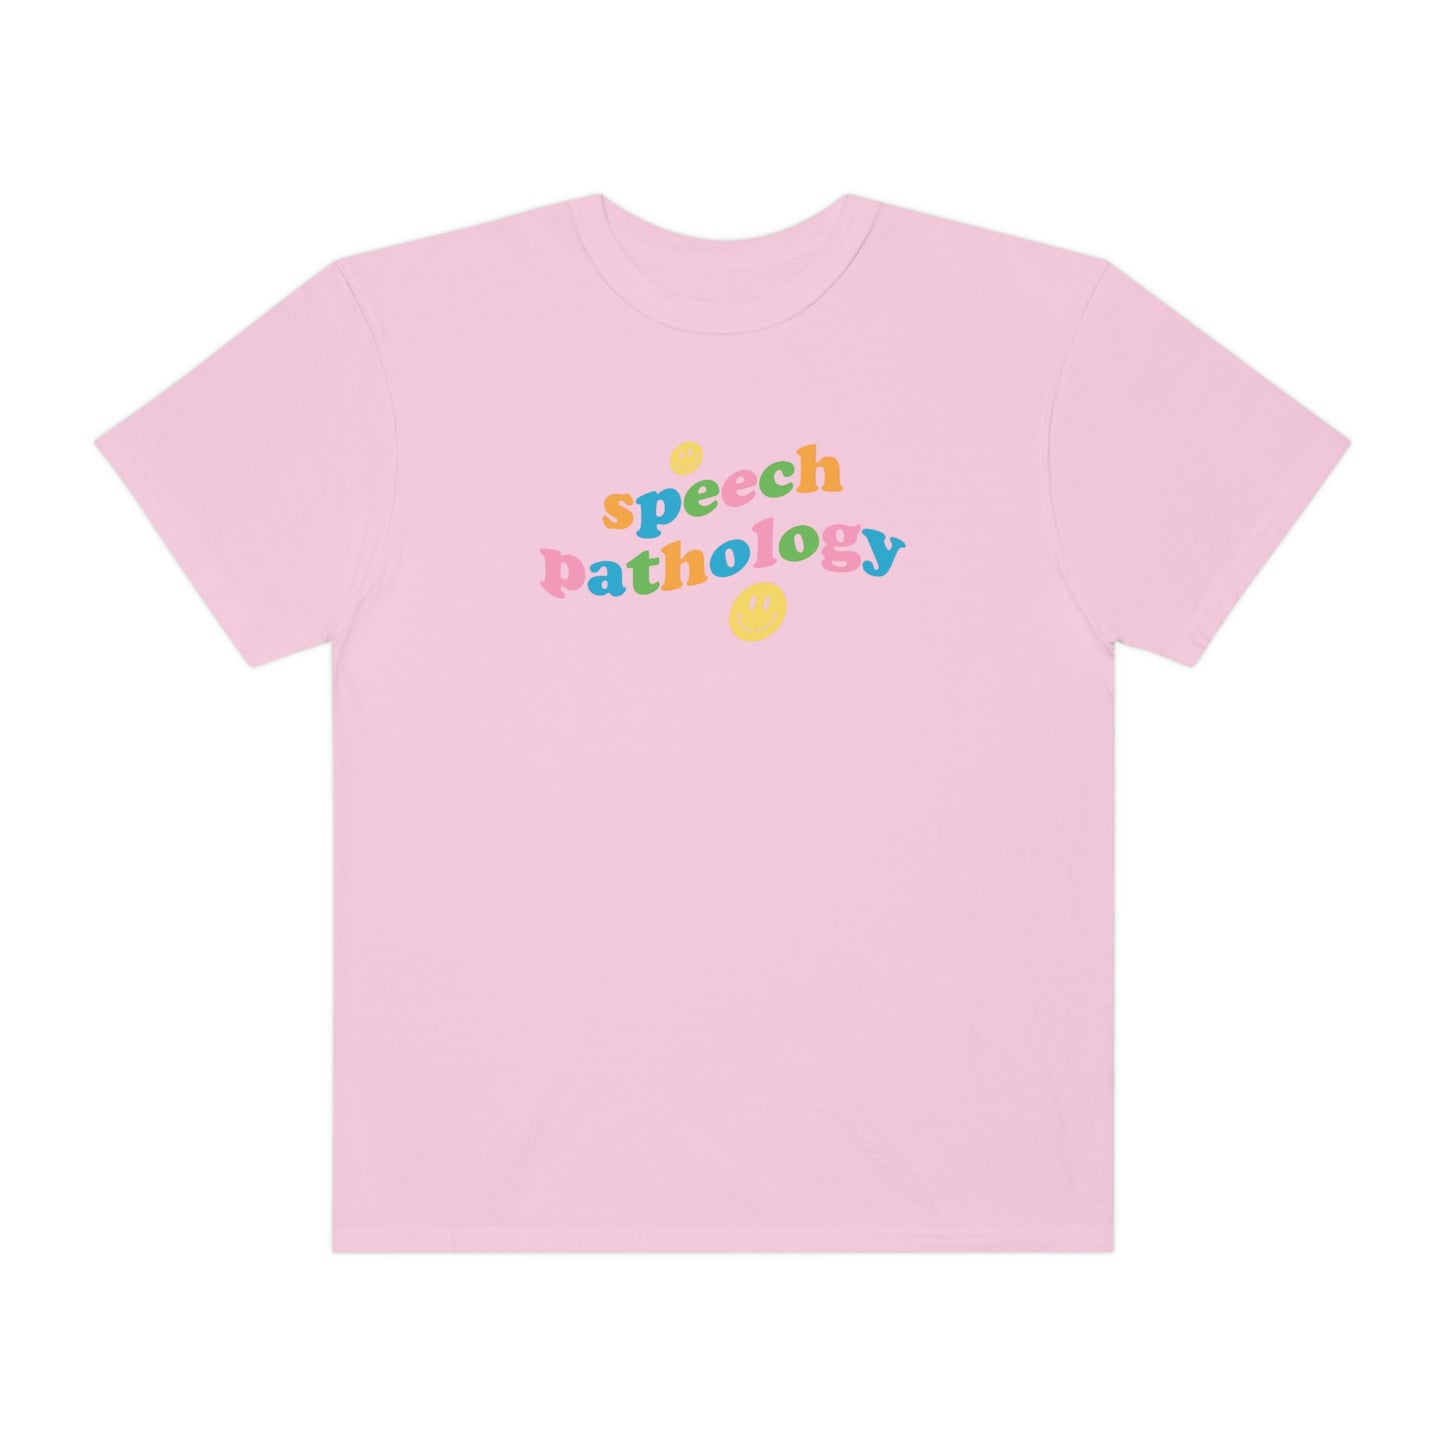 Speech Pathology Wavy Comfort Colors T-Shirt